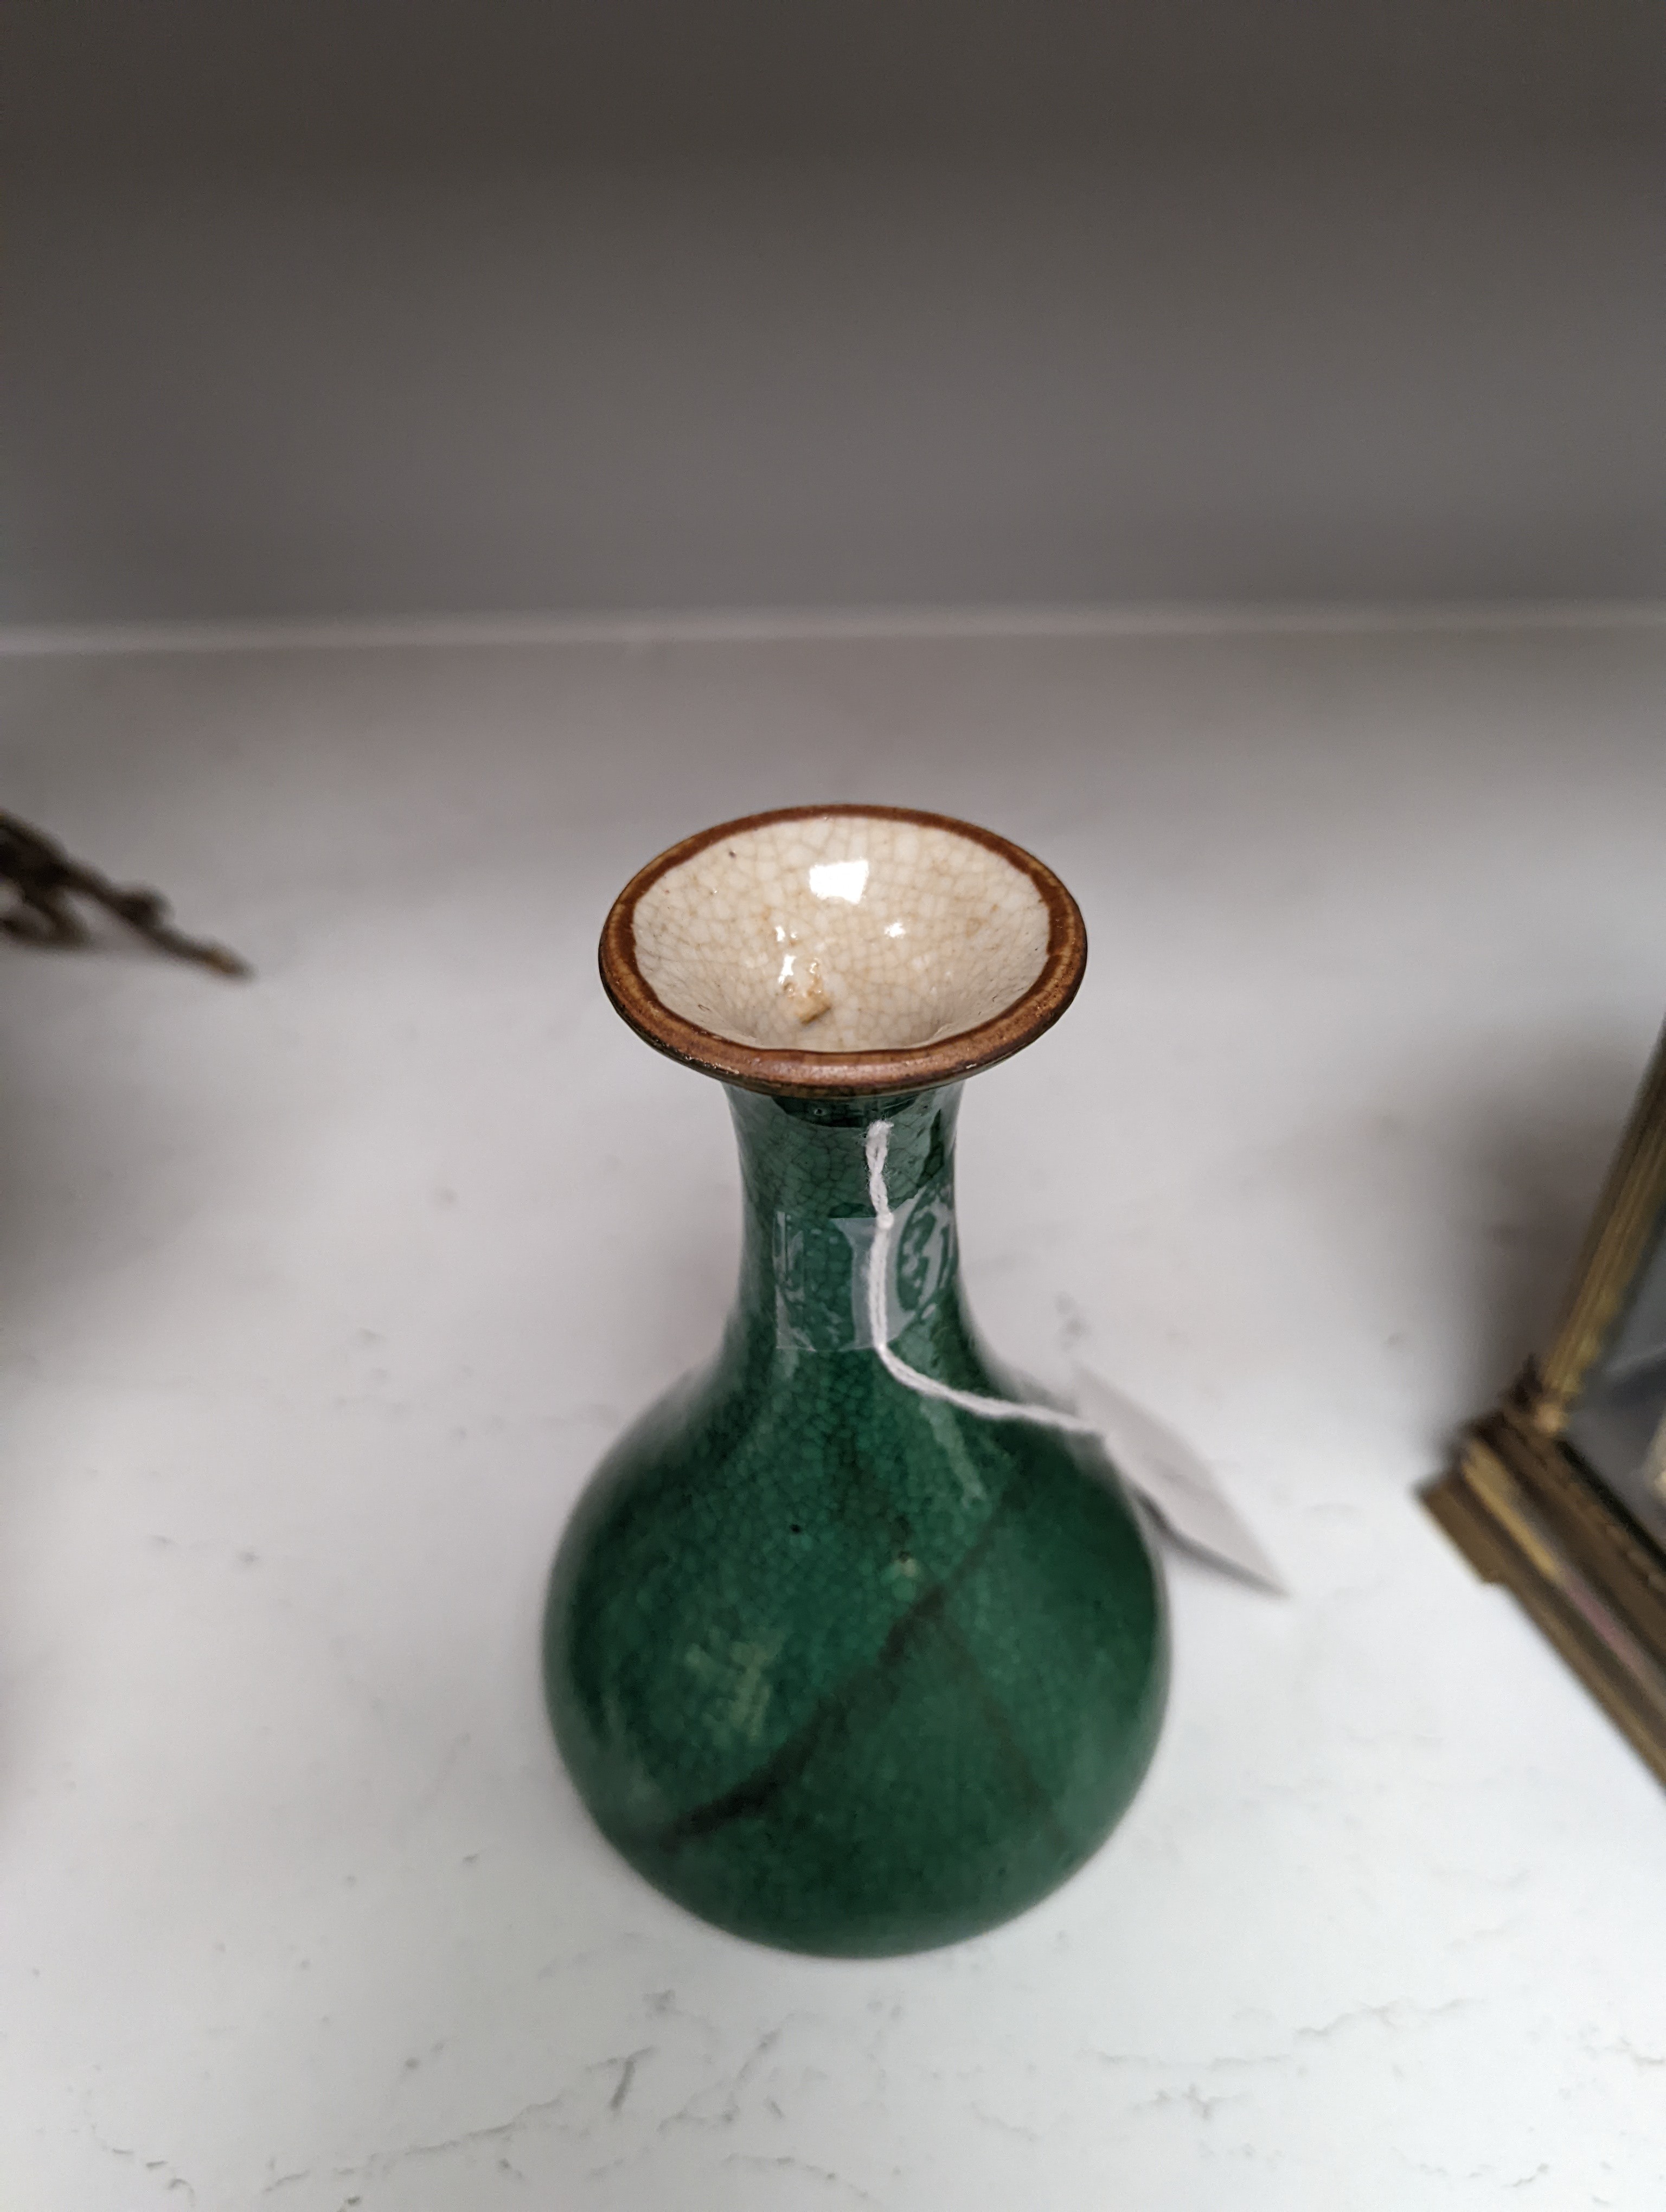 A Chinese green crackle glaze vase 15cm